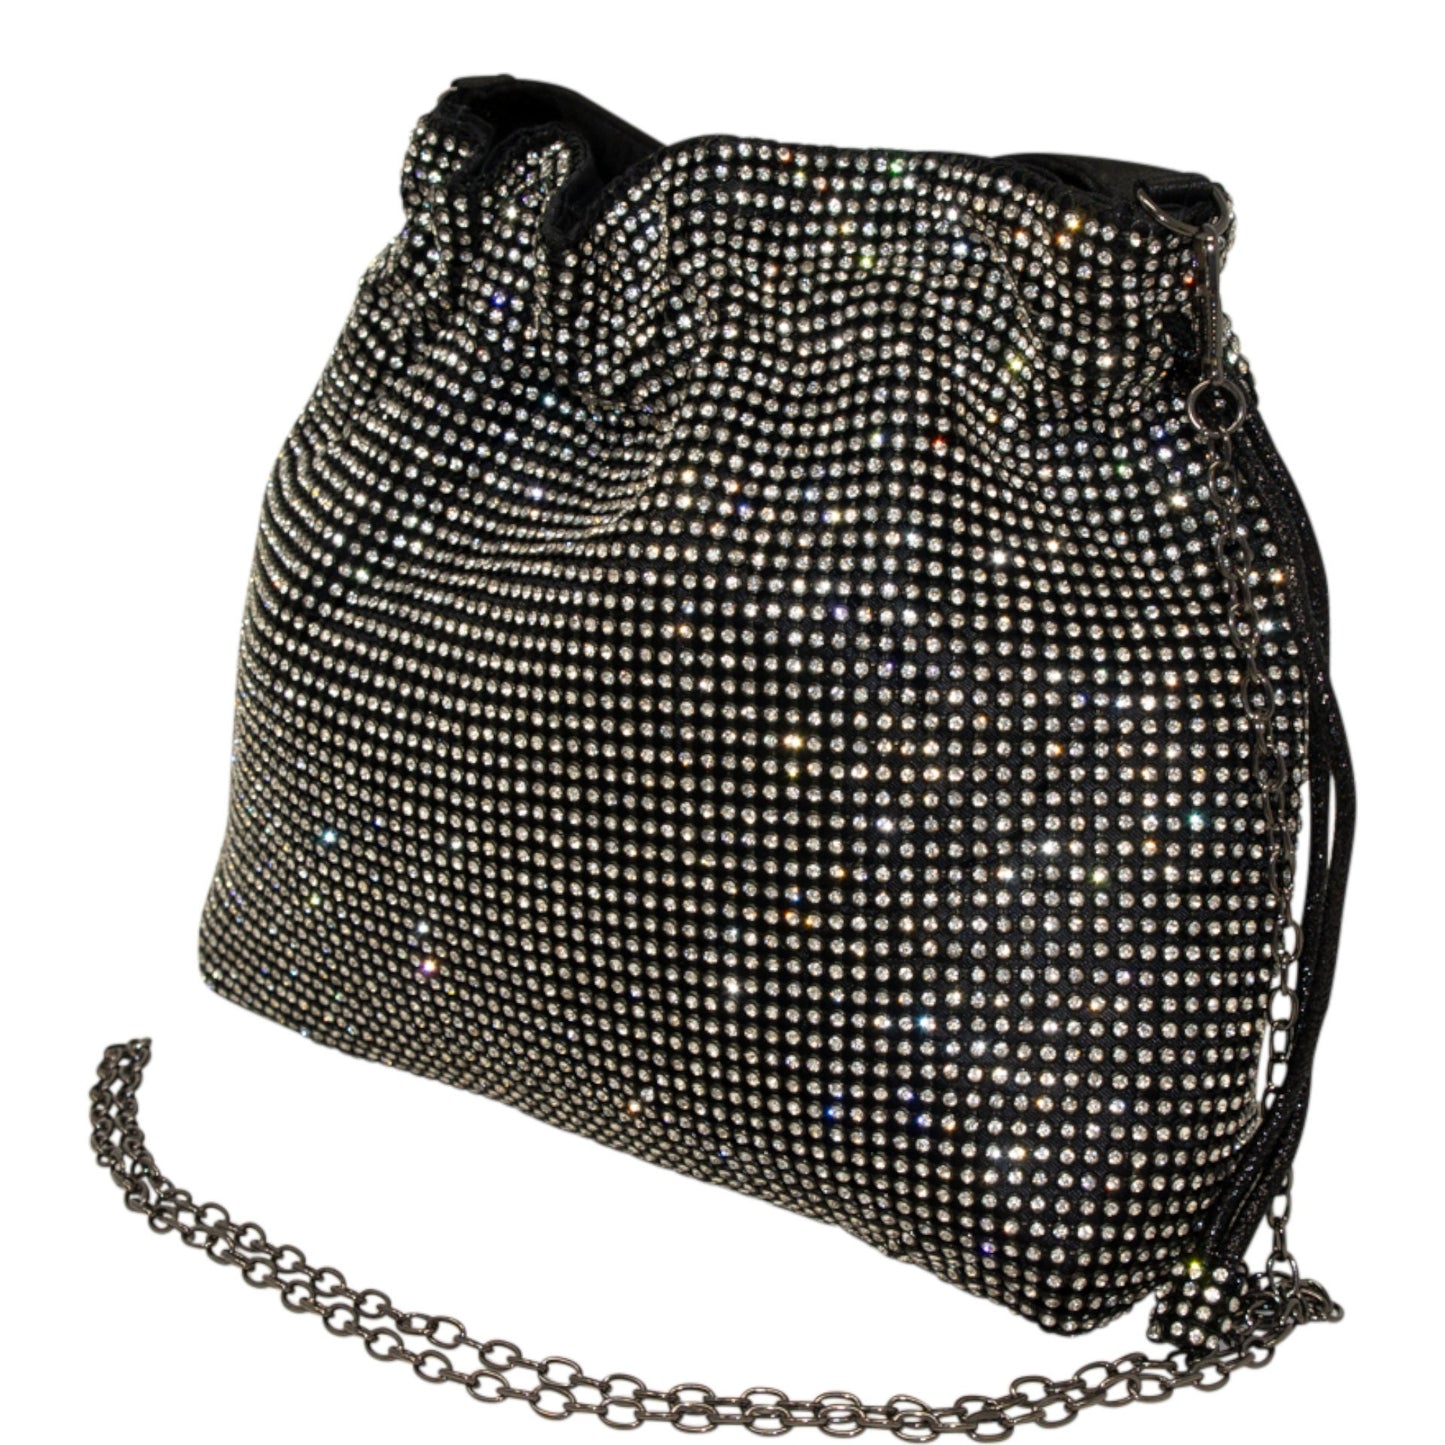 Sparkly Black Draw String Shoulder Bag perfect eye-catching  Black handbag Gift Present Wedding Party